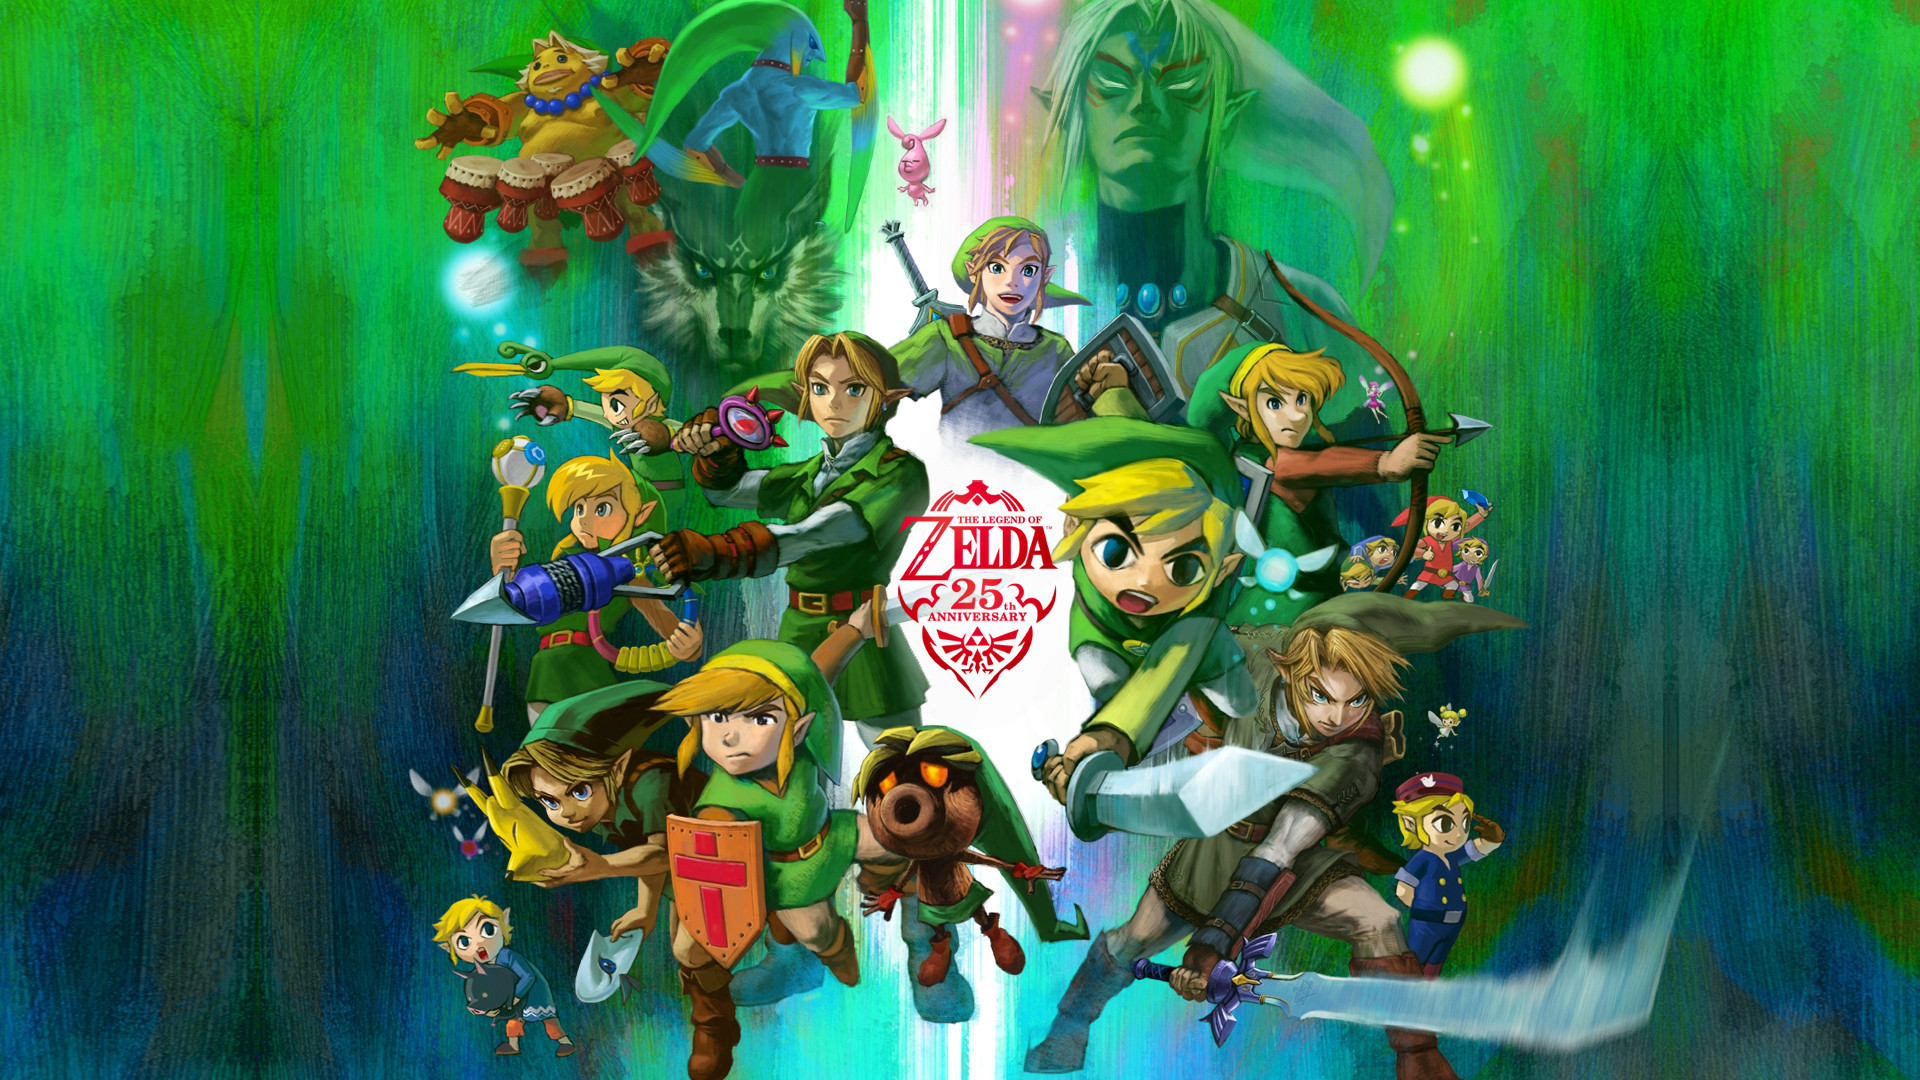 1920x1080  The Legend of Zelda Wallpaper HD | Wallpapers, Backgrounds,  Images .